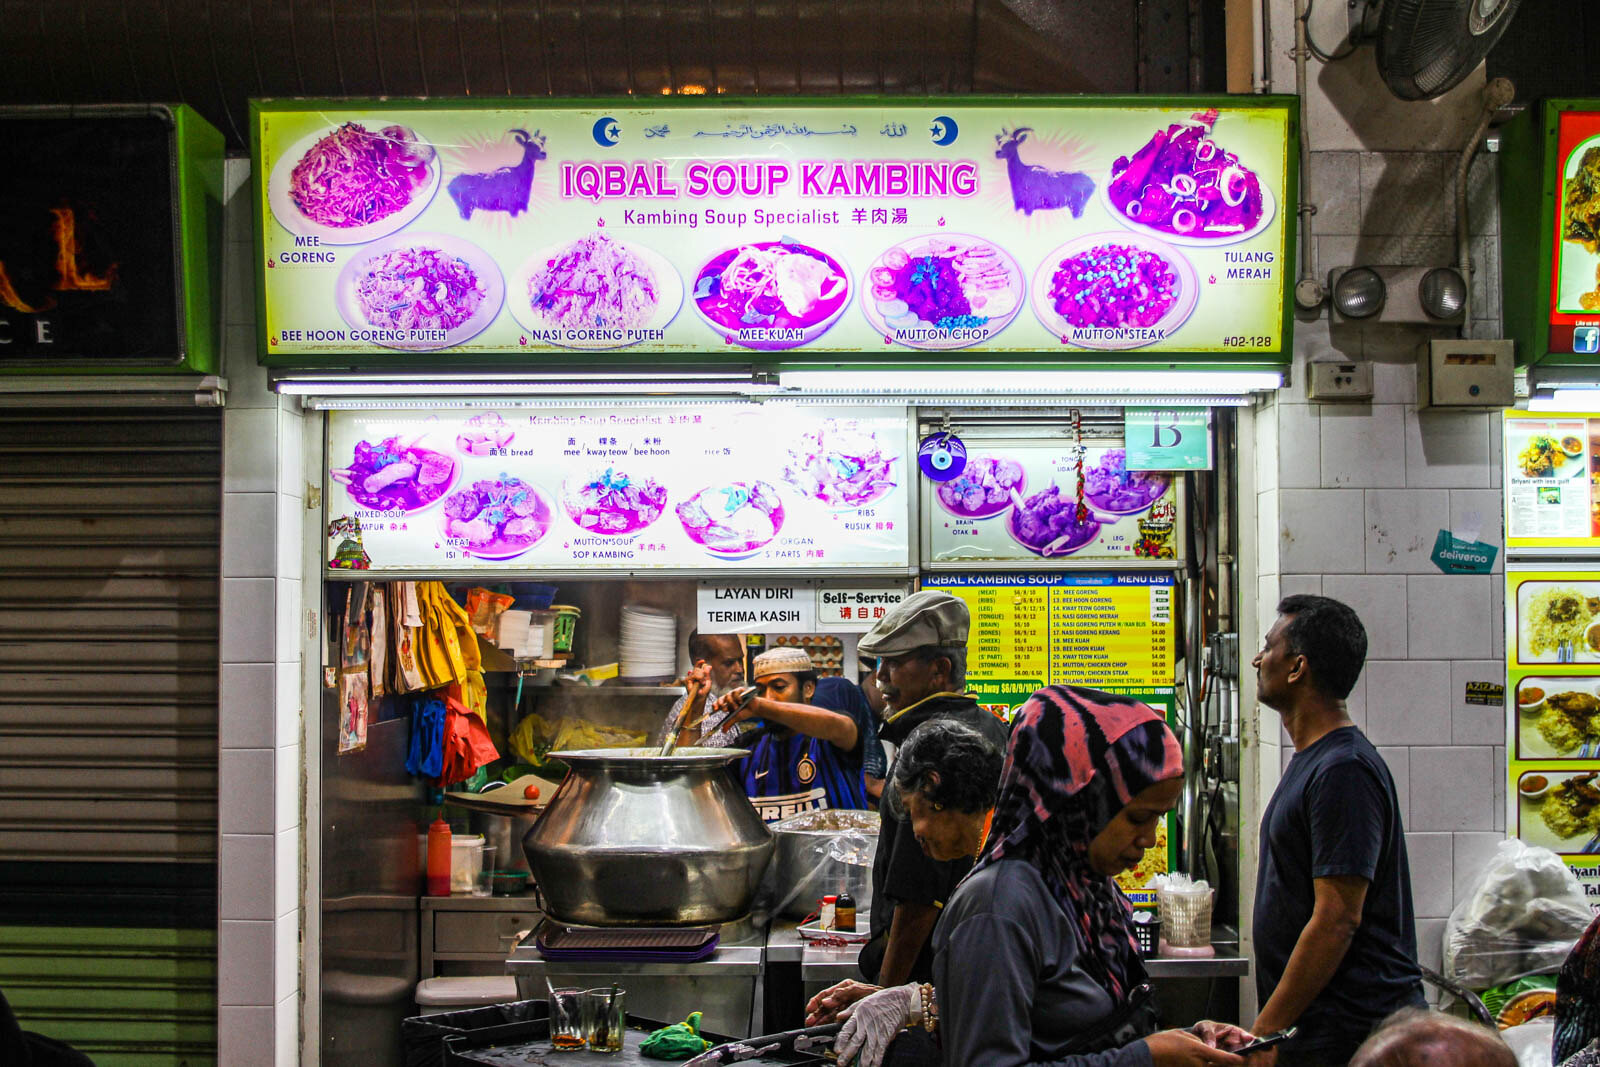 Soup Kambing Iqbal storefront